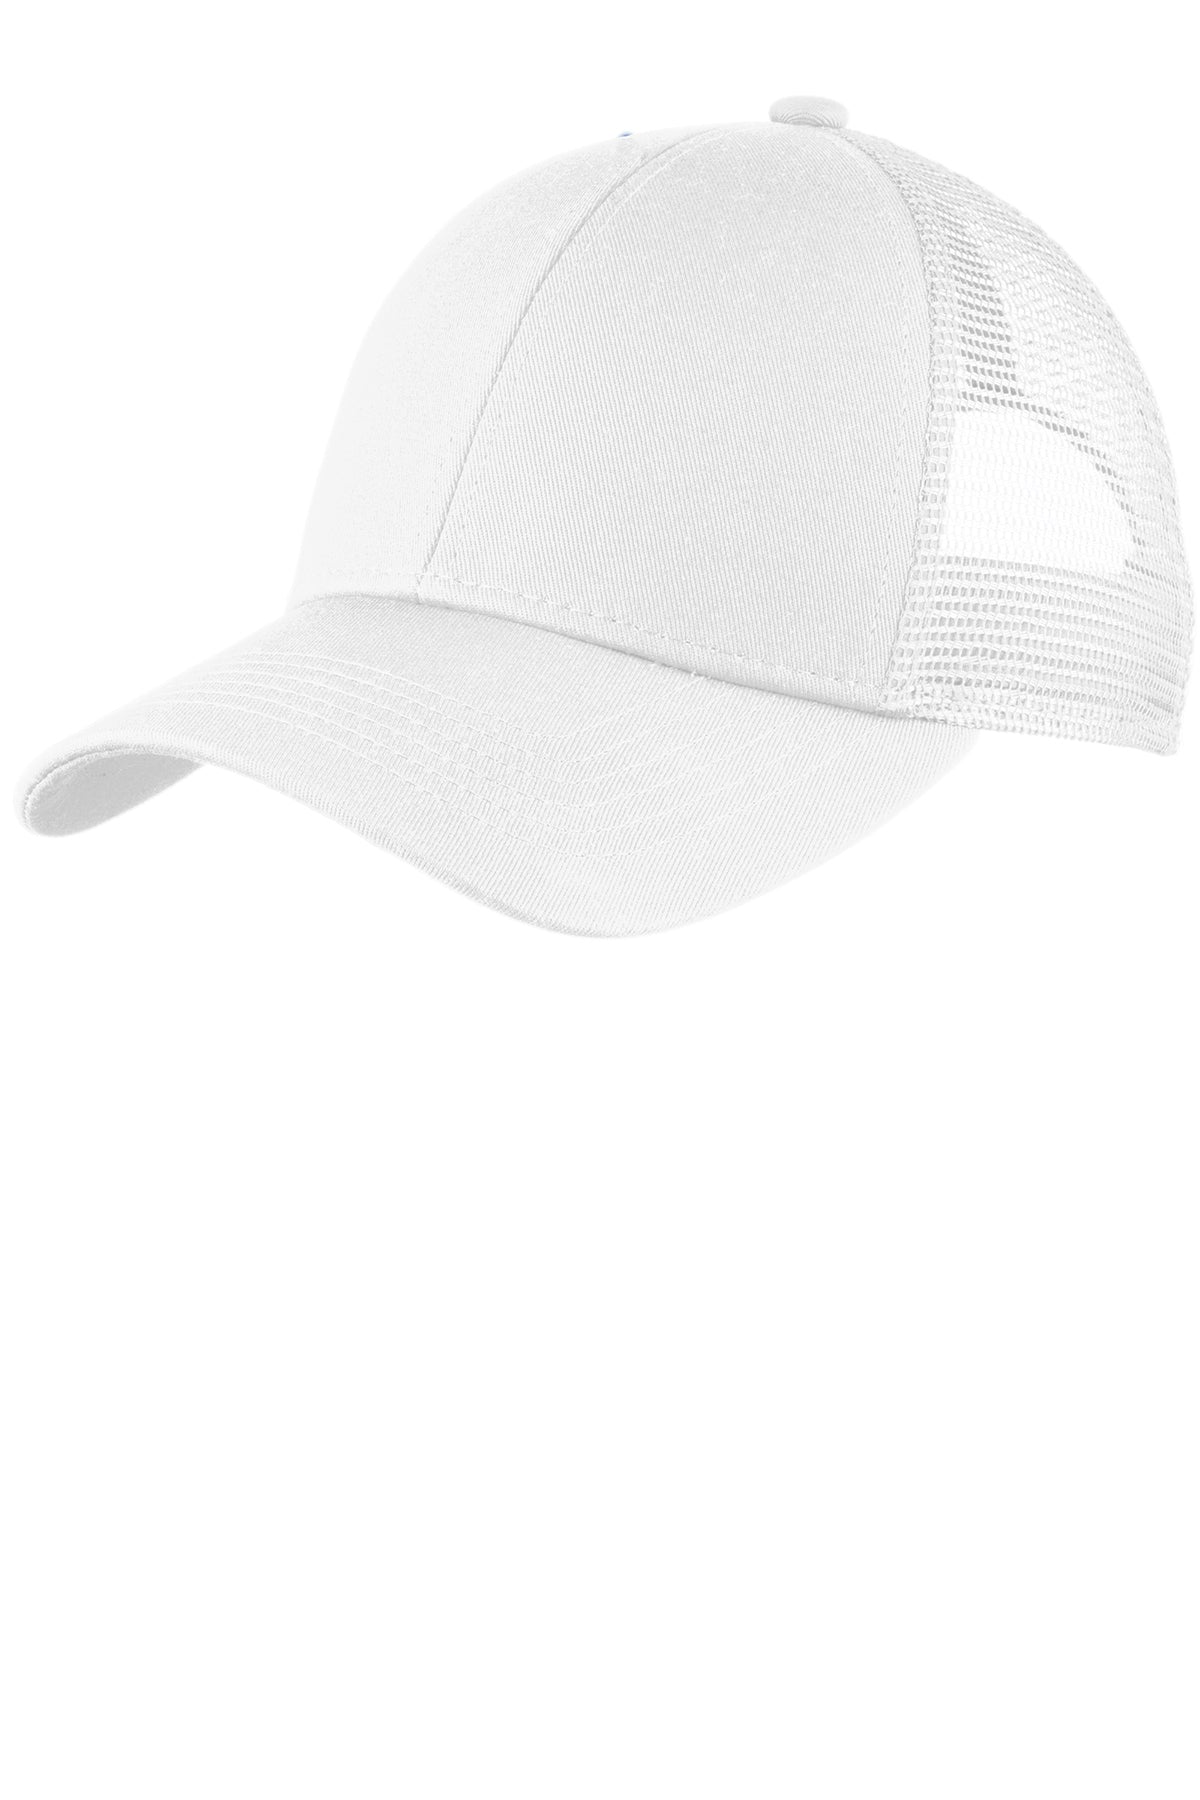 Port Authority Adjustable Mesh Back Branded Caps, White